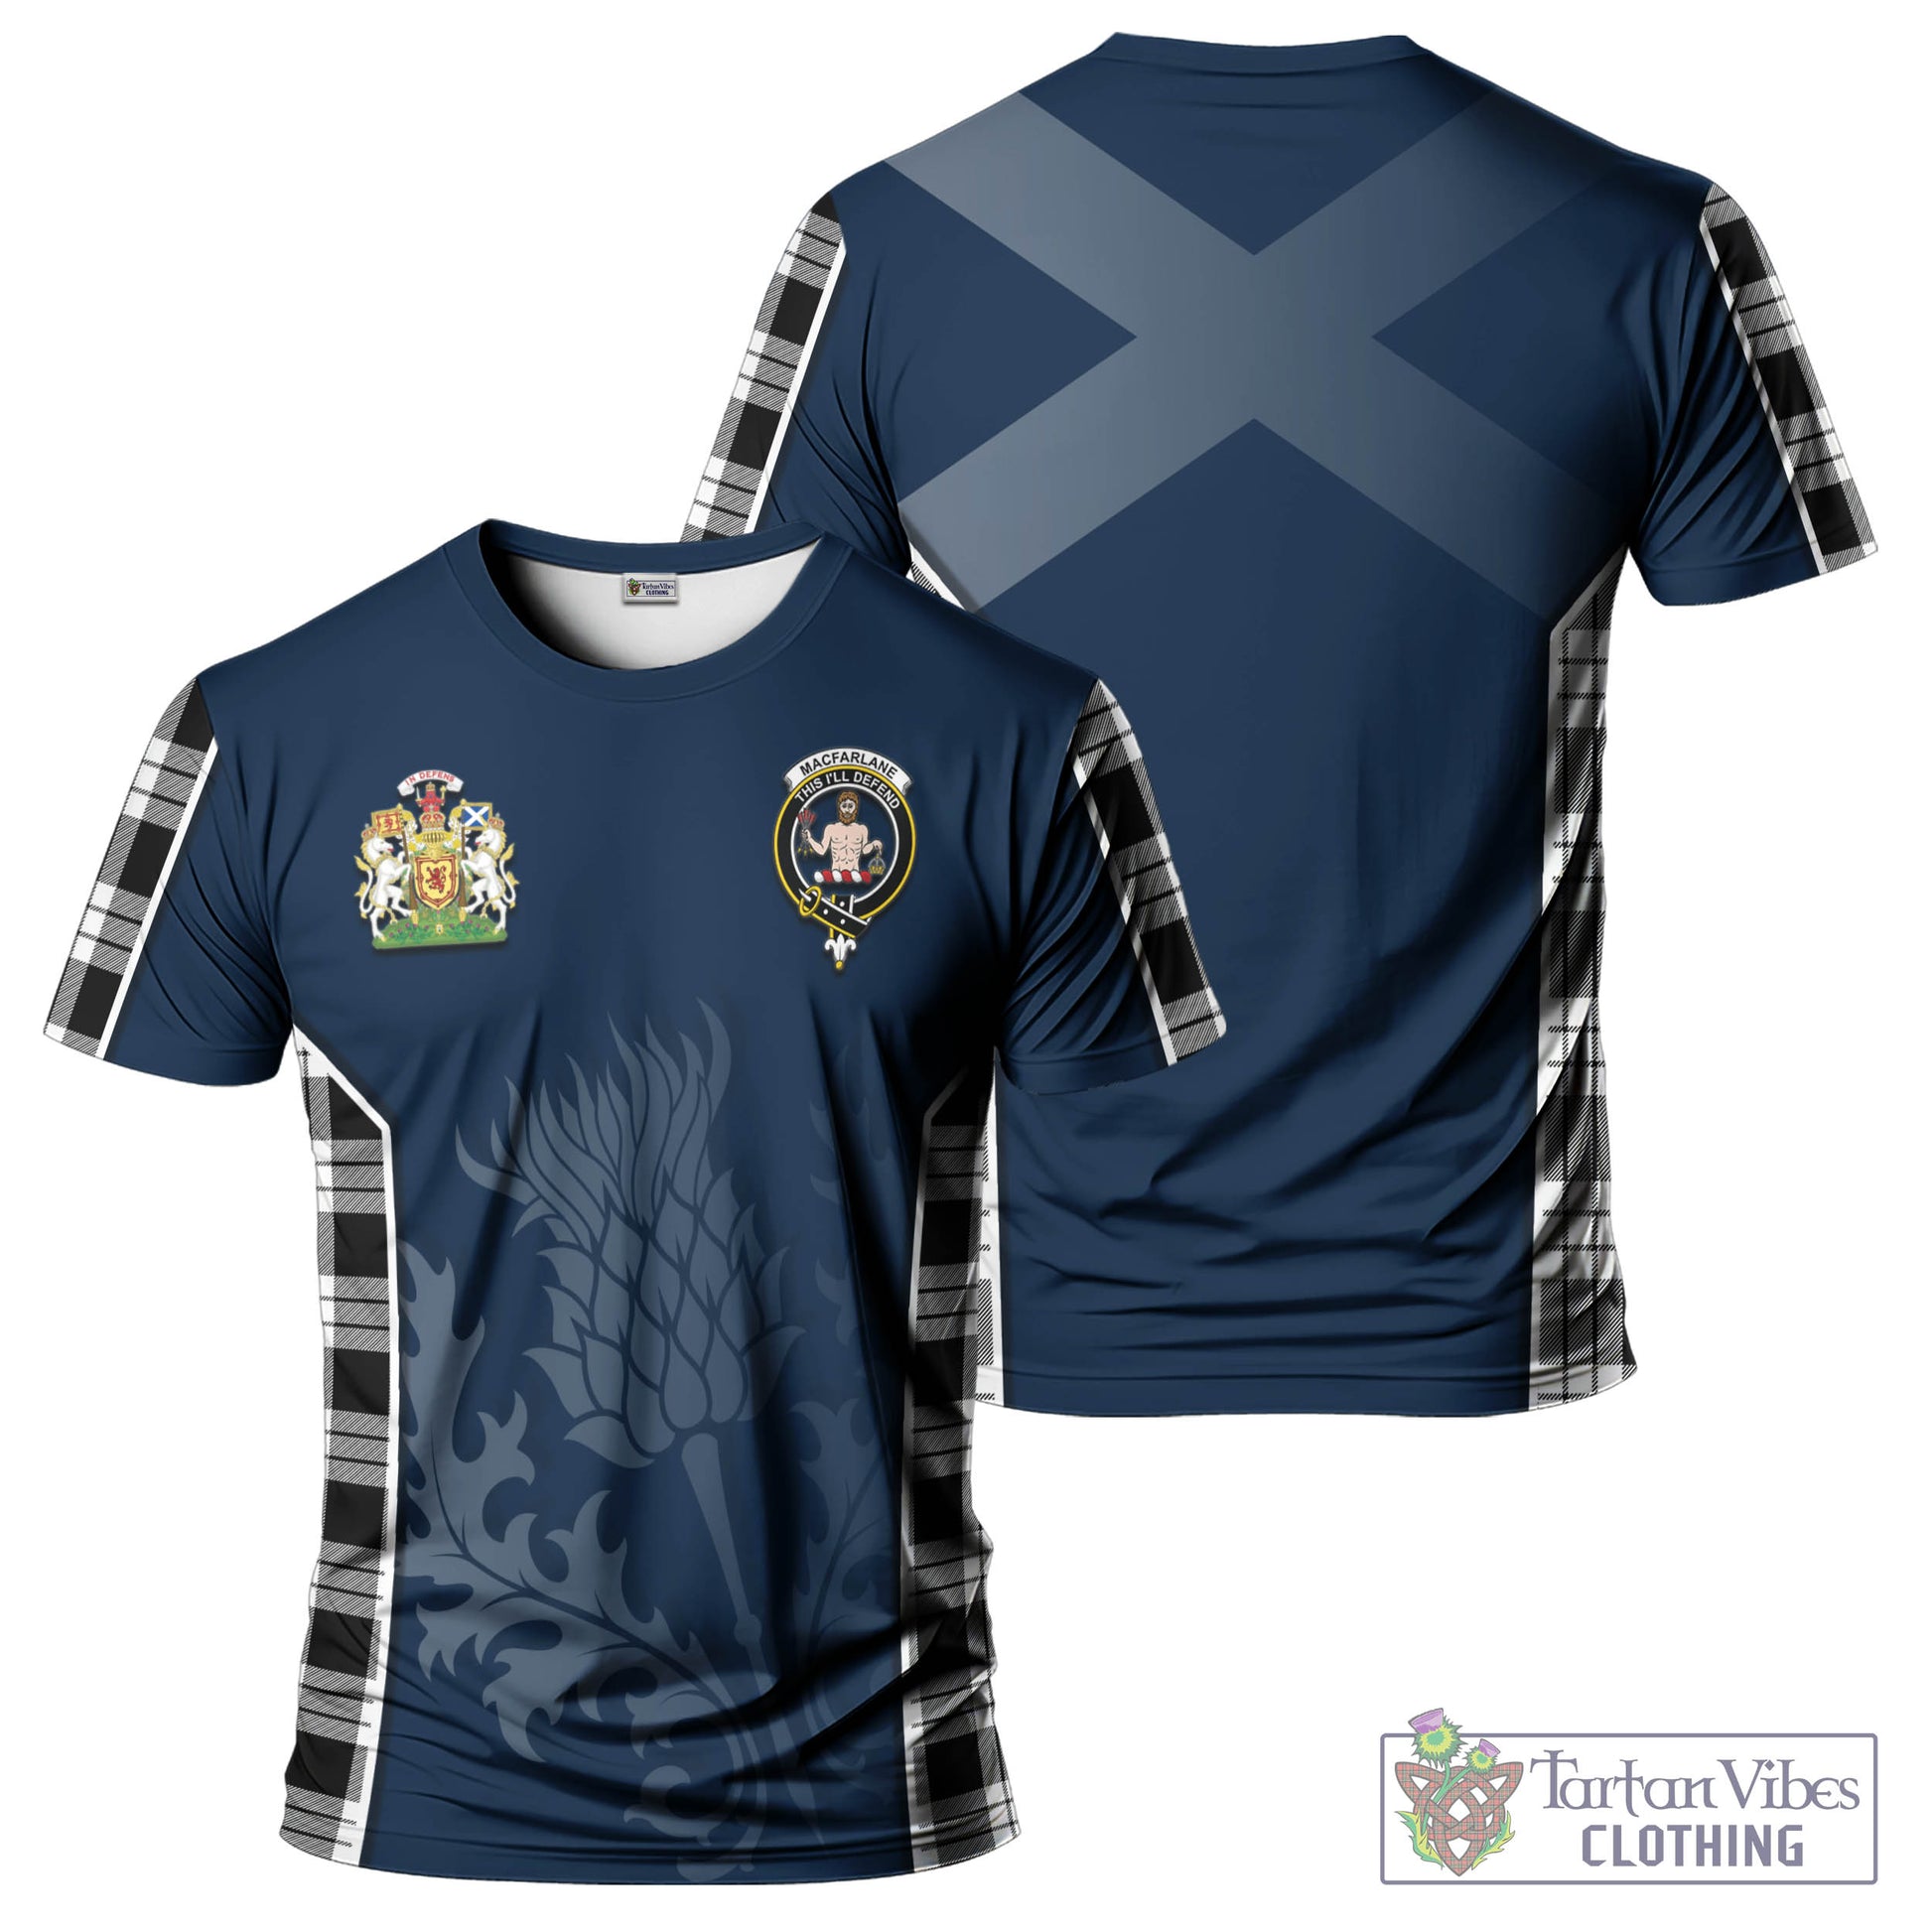 Tartan Vibes Clothing MacFarlane Black White Tartan T-Shirt with Family Crest and Scottish Thistle Vibes Sport Style